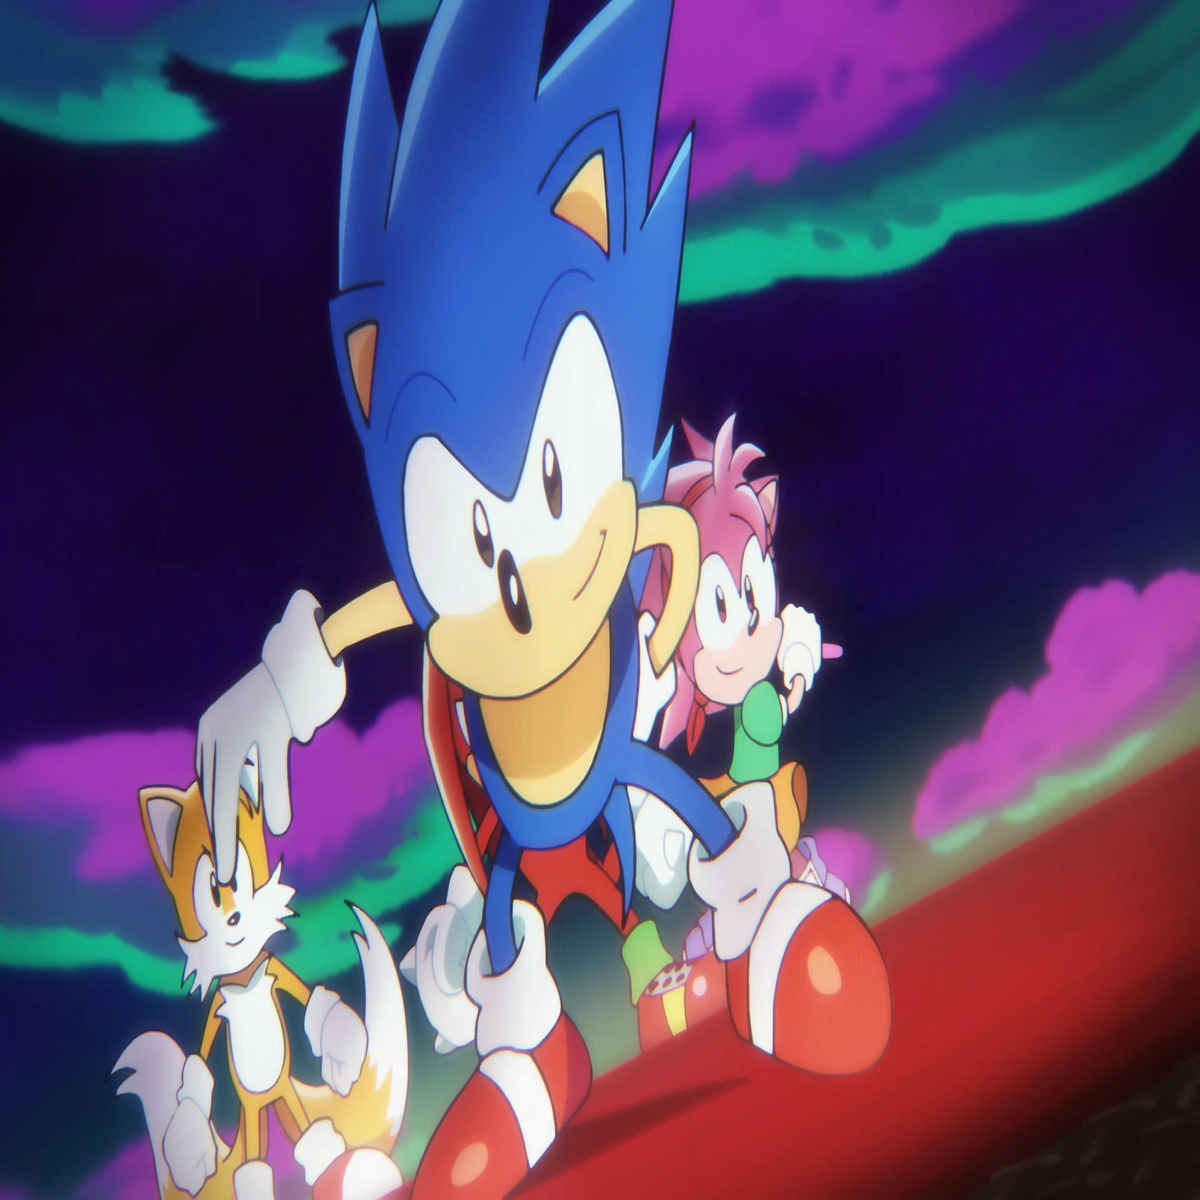 Sonic Chaos Fan Remake Announcement Trailer : r/Games